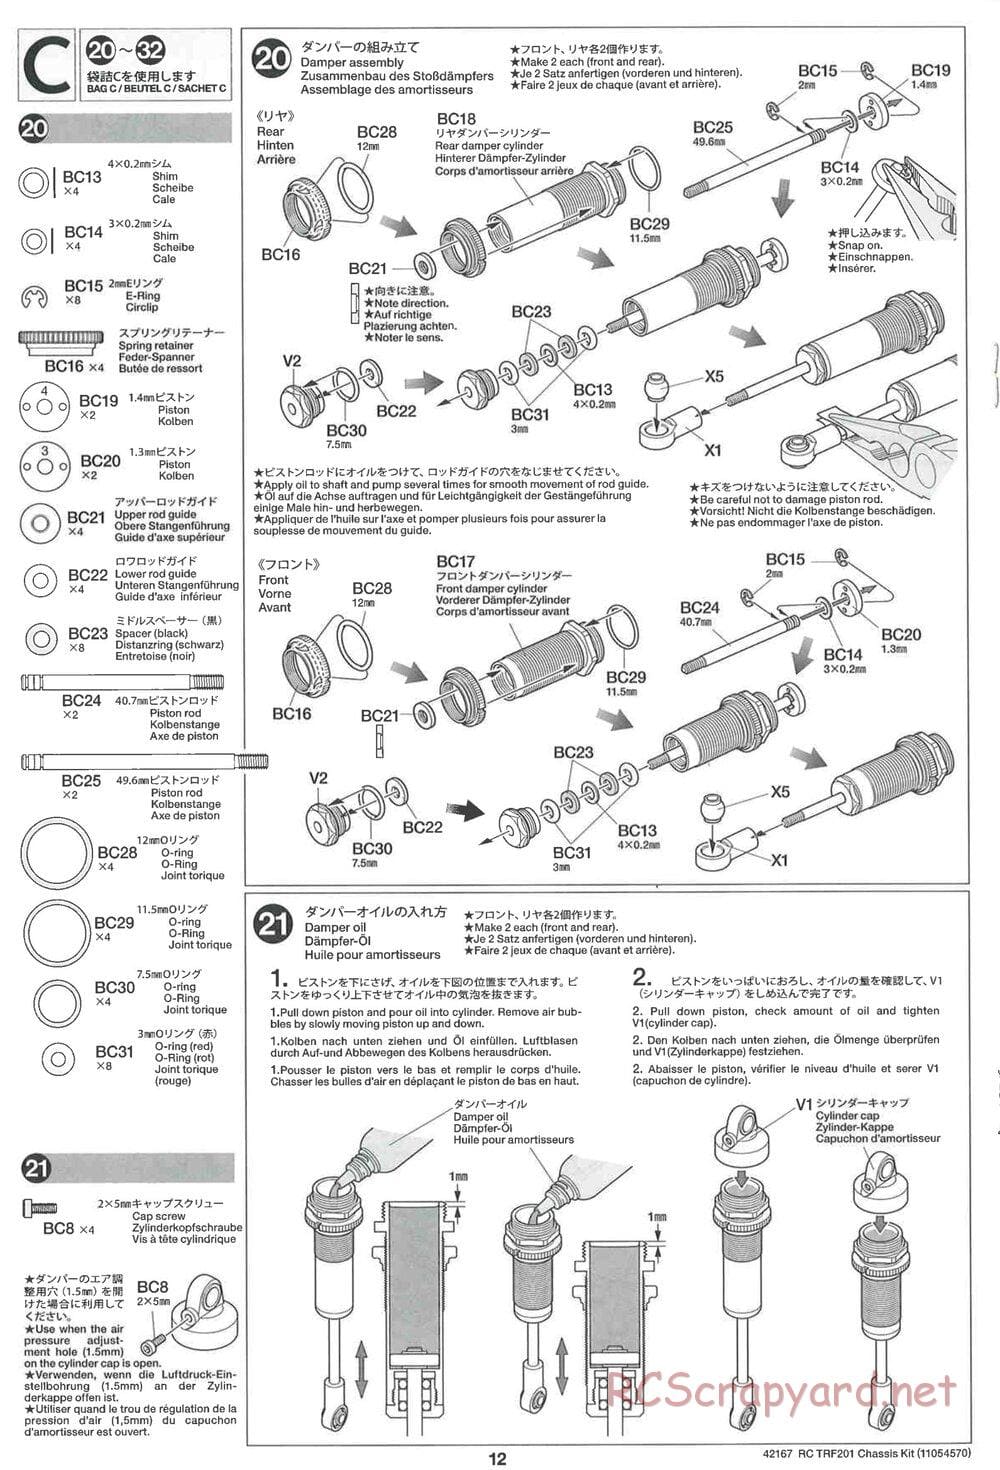 Tamiya - TRF201 Chassis - Manual - Page 12